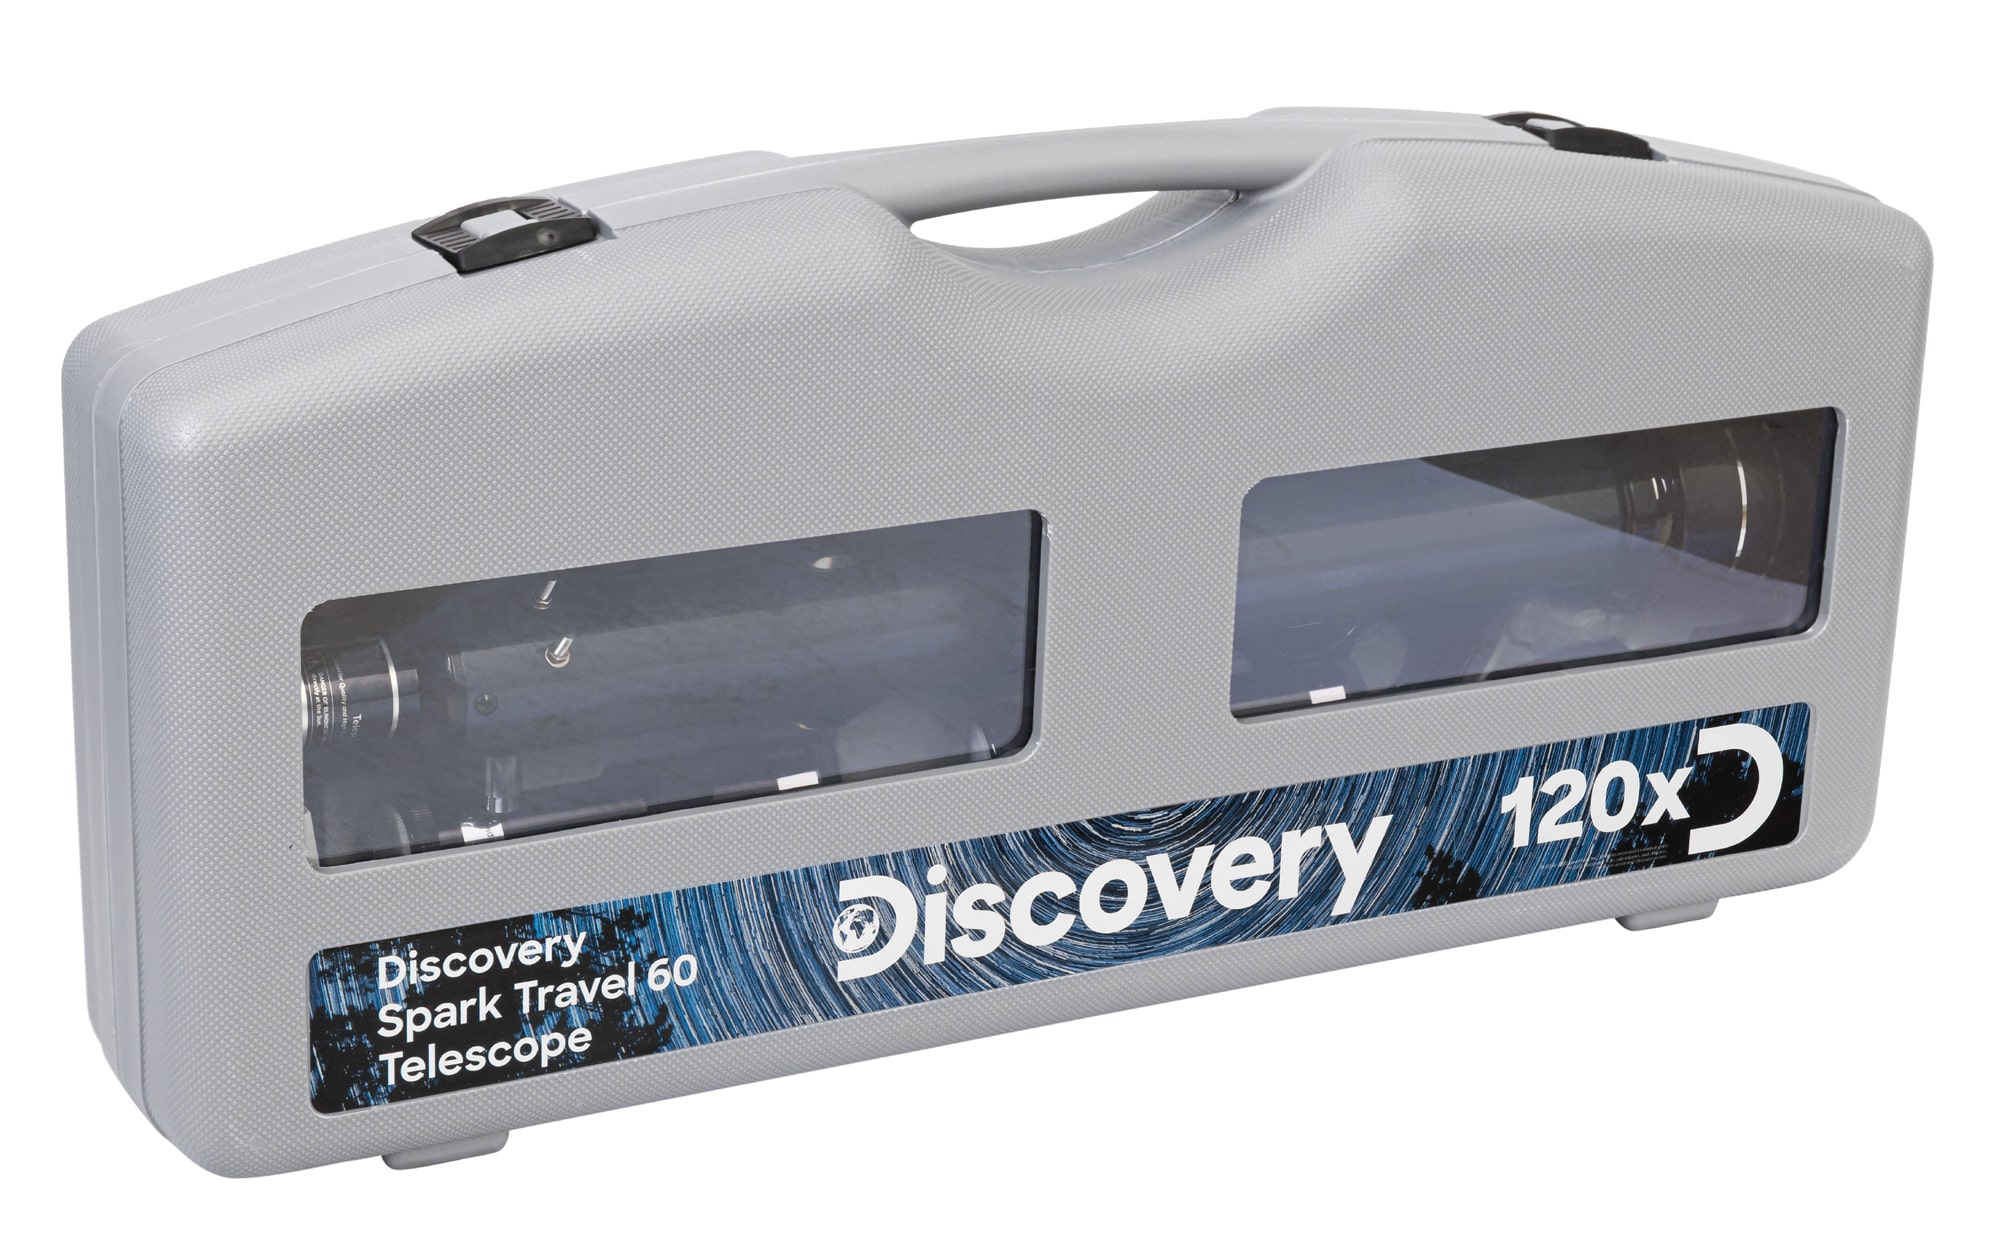 Телескоп Discovery Spark Travel 60 с книгой